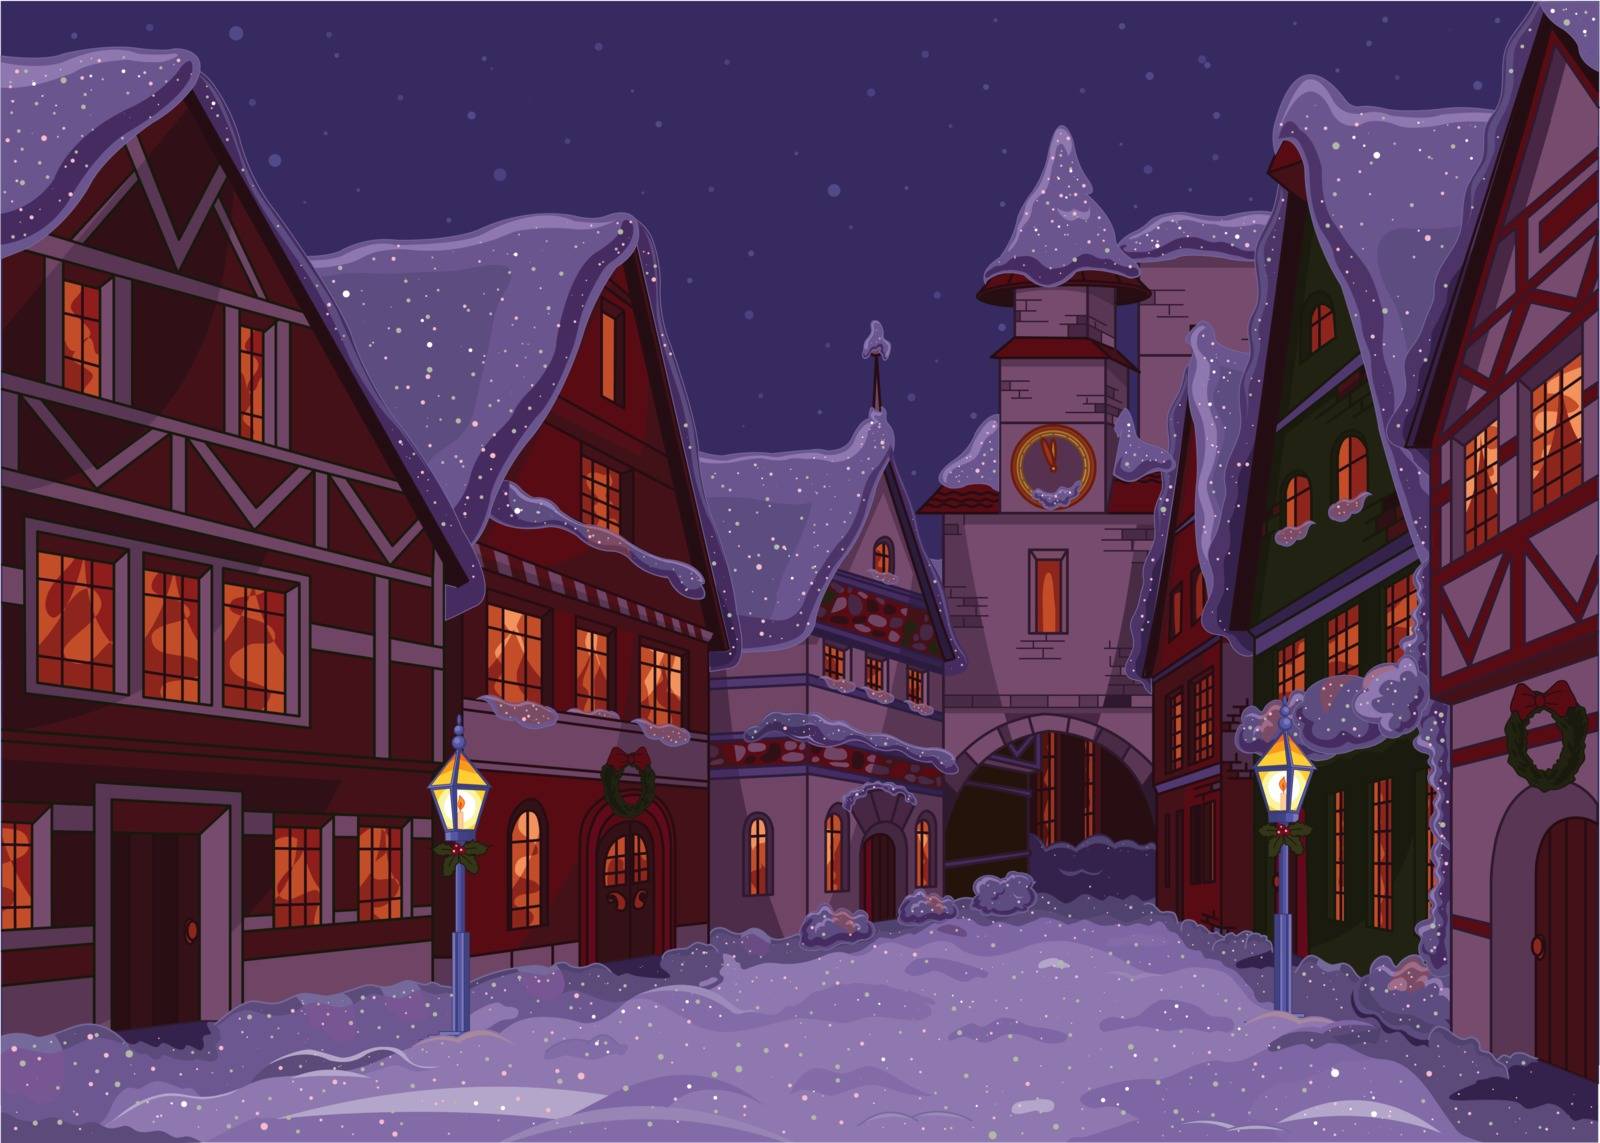 Christmas town by Dazdraperma